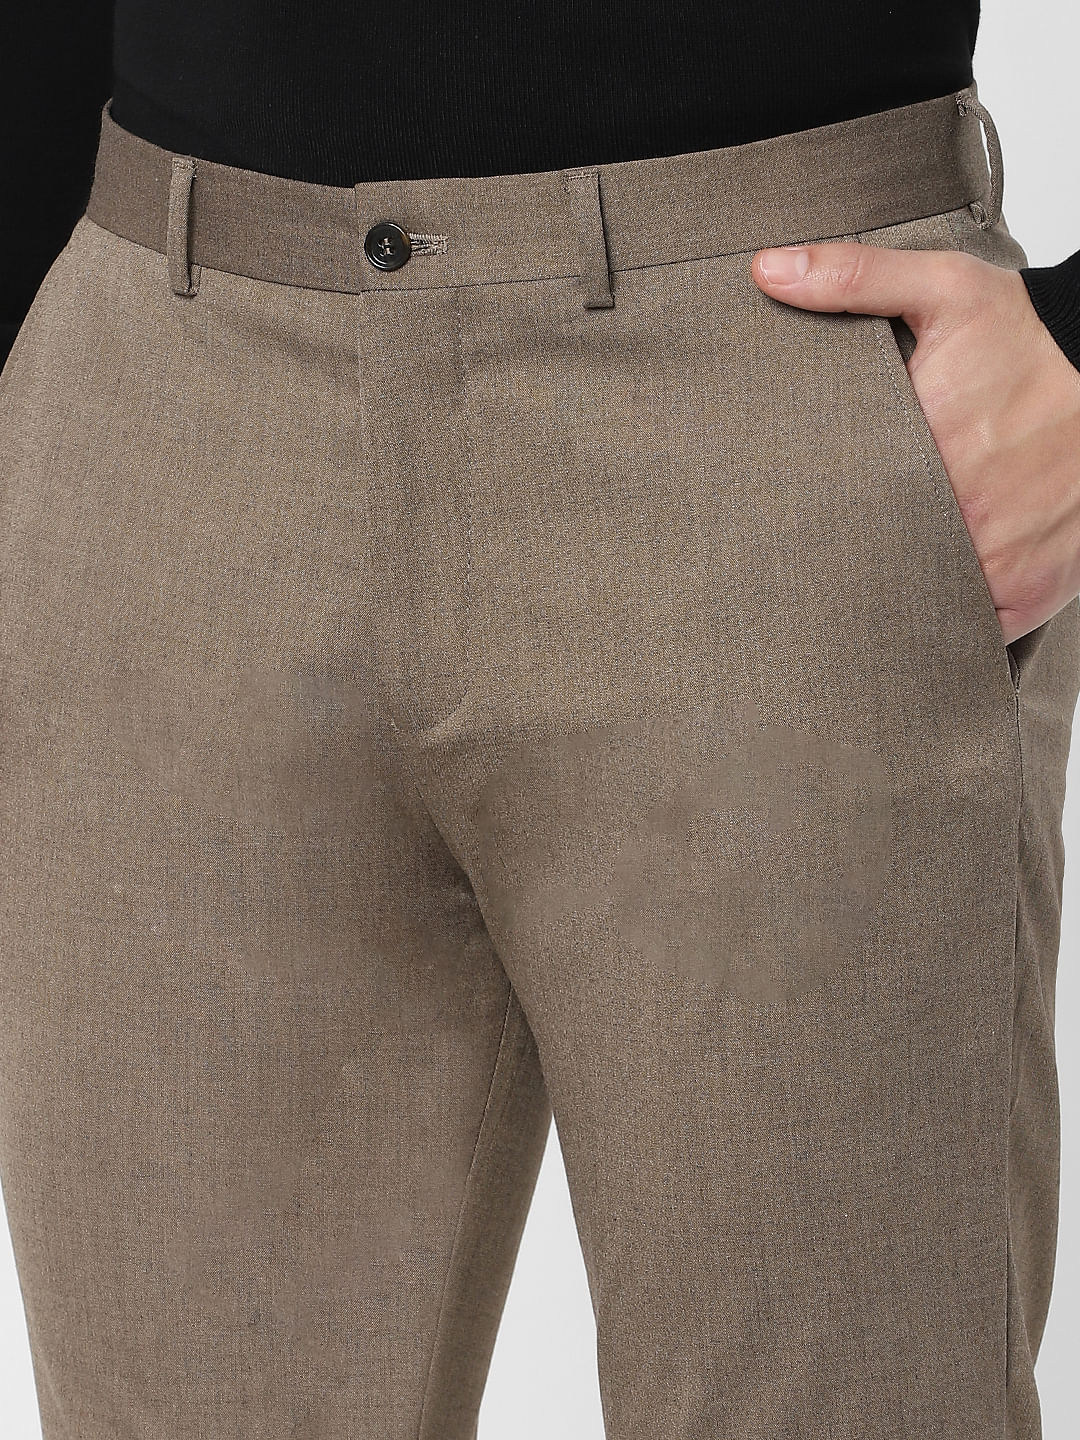 Buy Matte Grey Checks Linen Cotton Pants Online in India